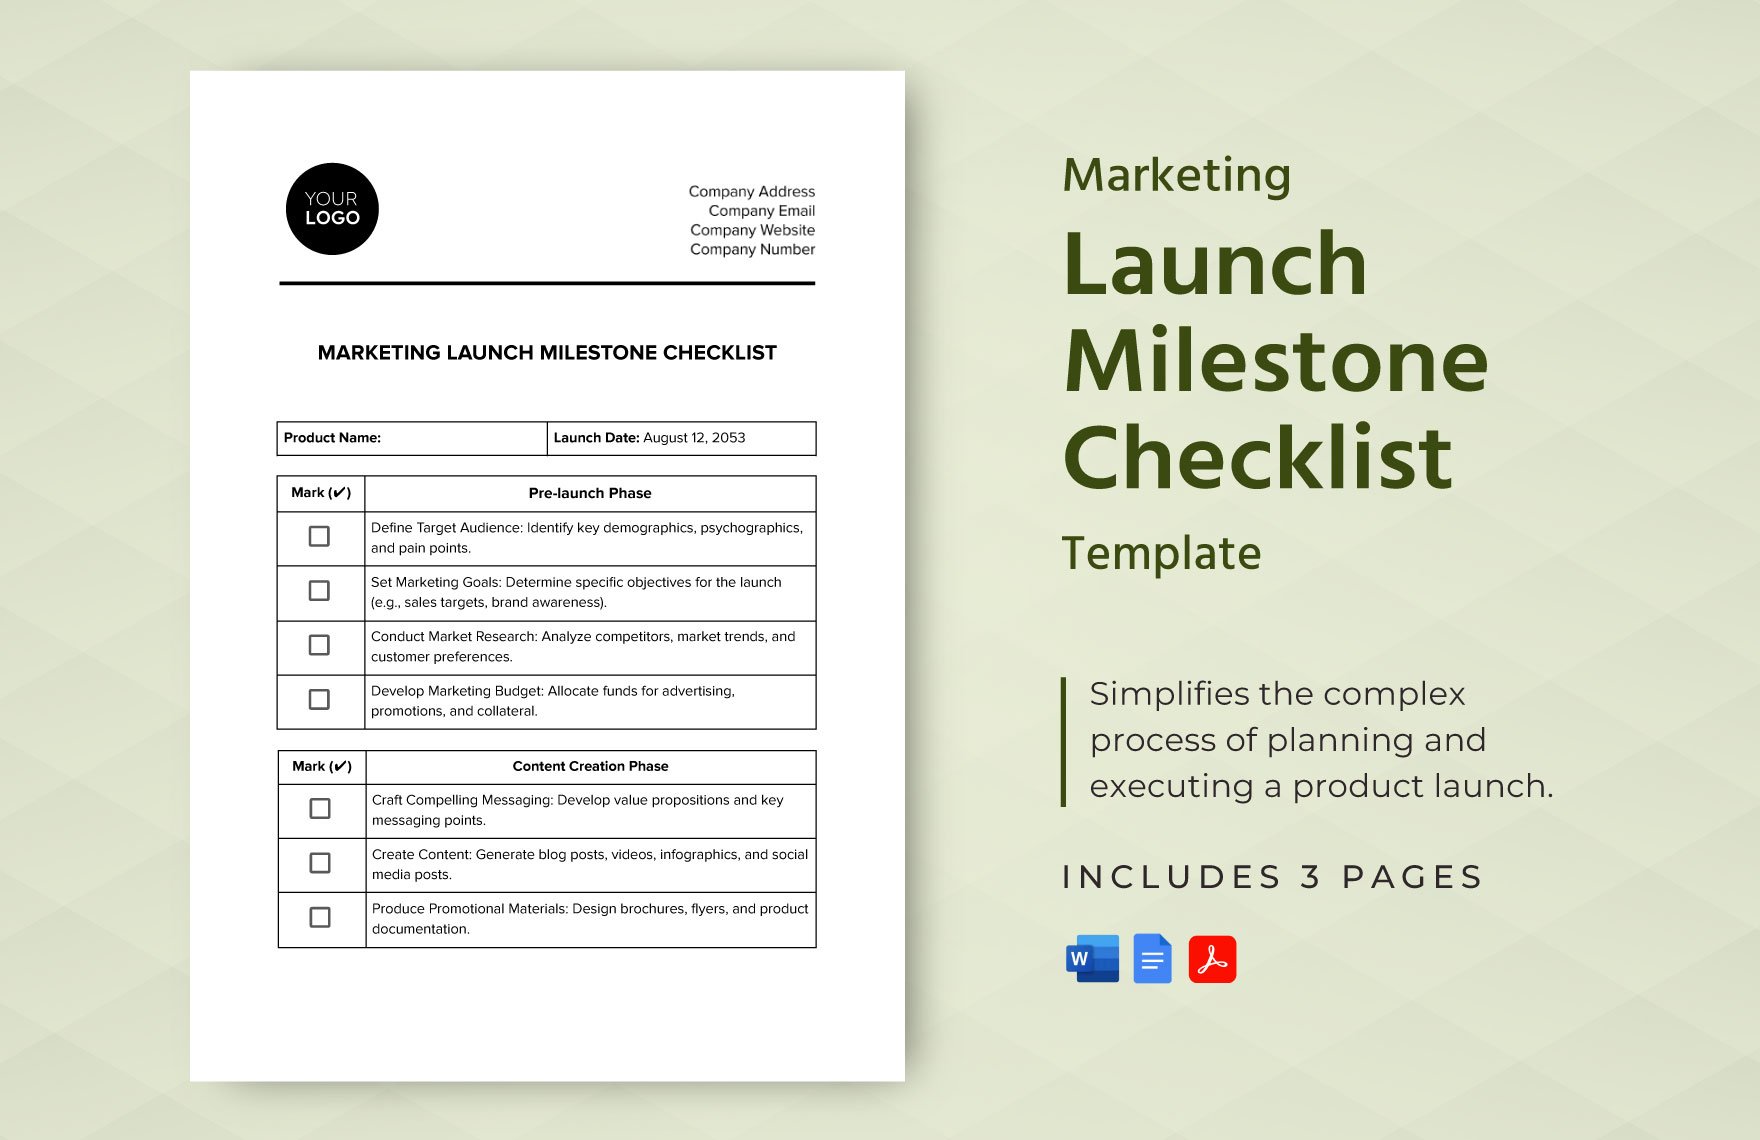 Marketing Launch Milestone Checklist Template in Word, Google Docs, PDF